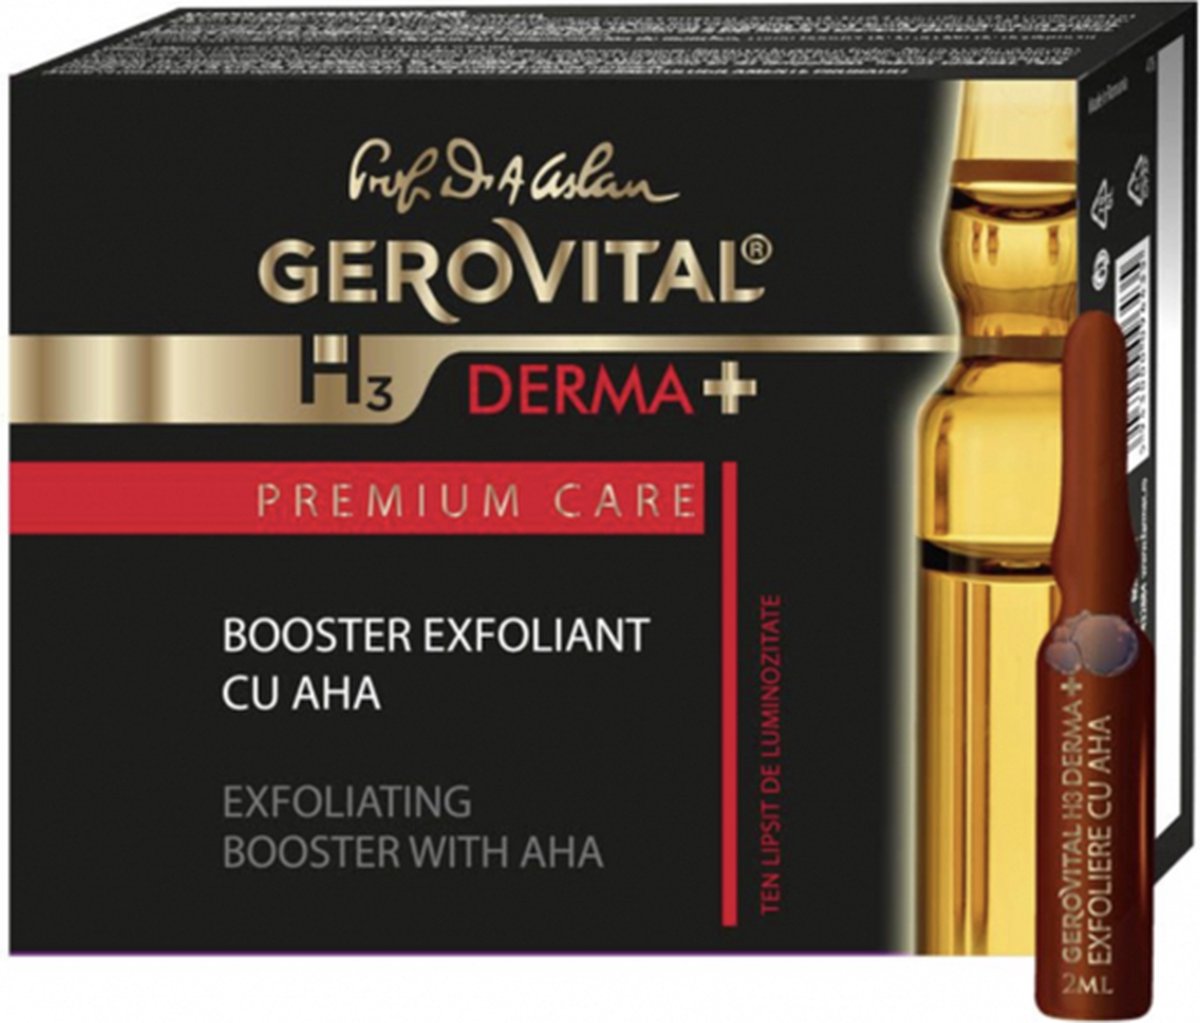 Exfoliating Booster with AHA Ampoules 4 X 2ml – Gerovital H3 Derma+ Premium Care